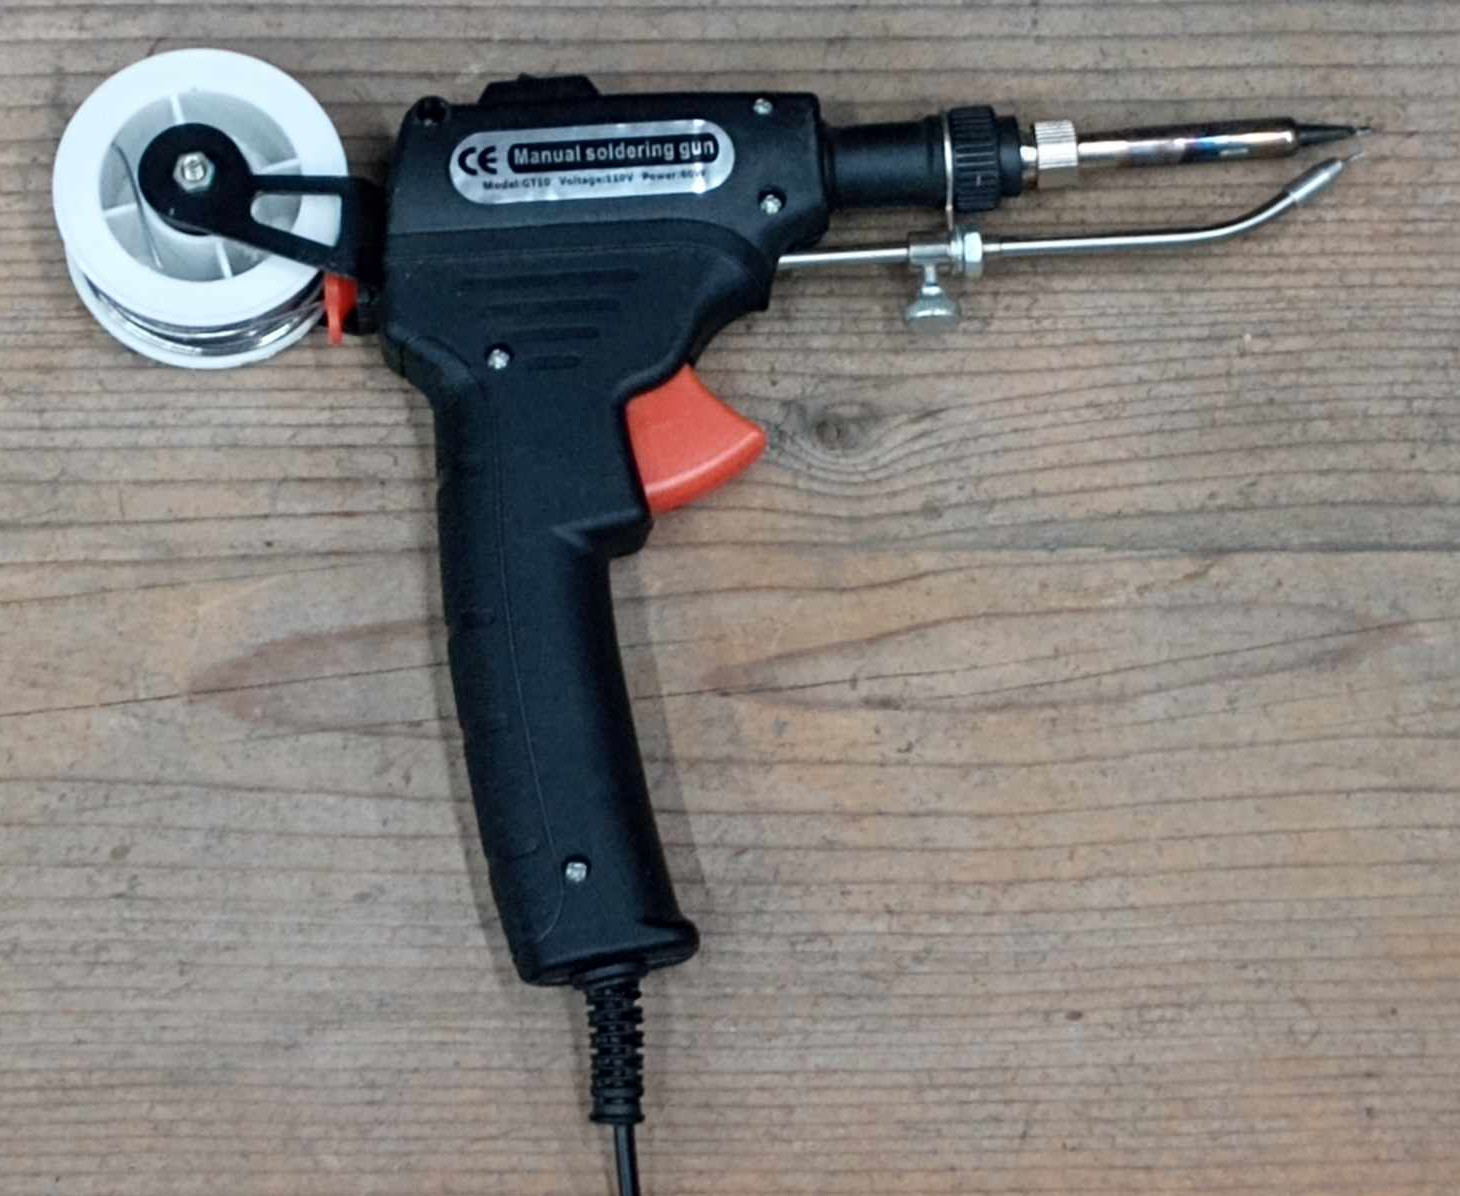 A device that makes Soldering convenient - Self dispensing Solder Gun